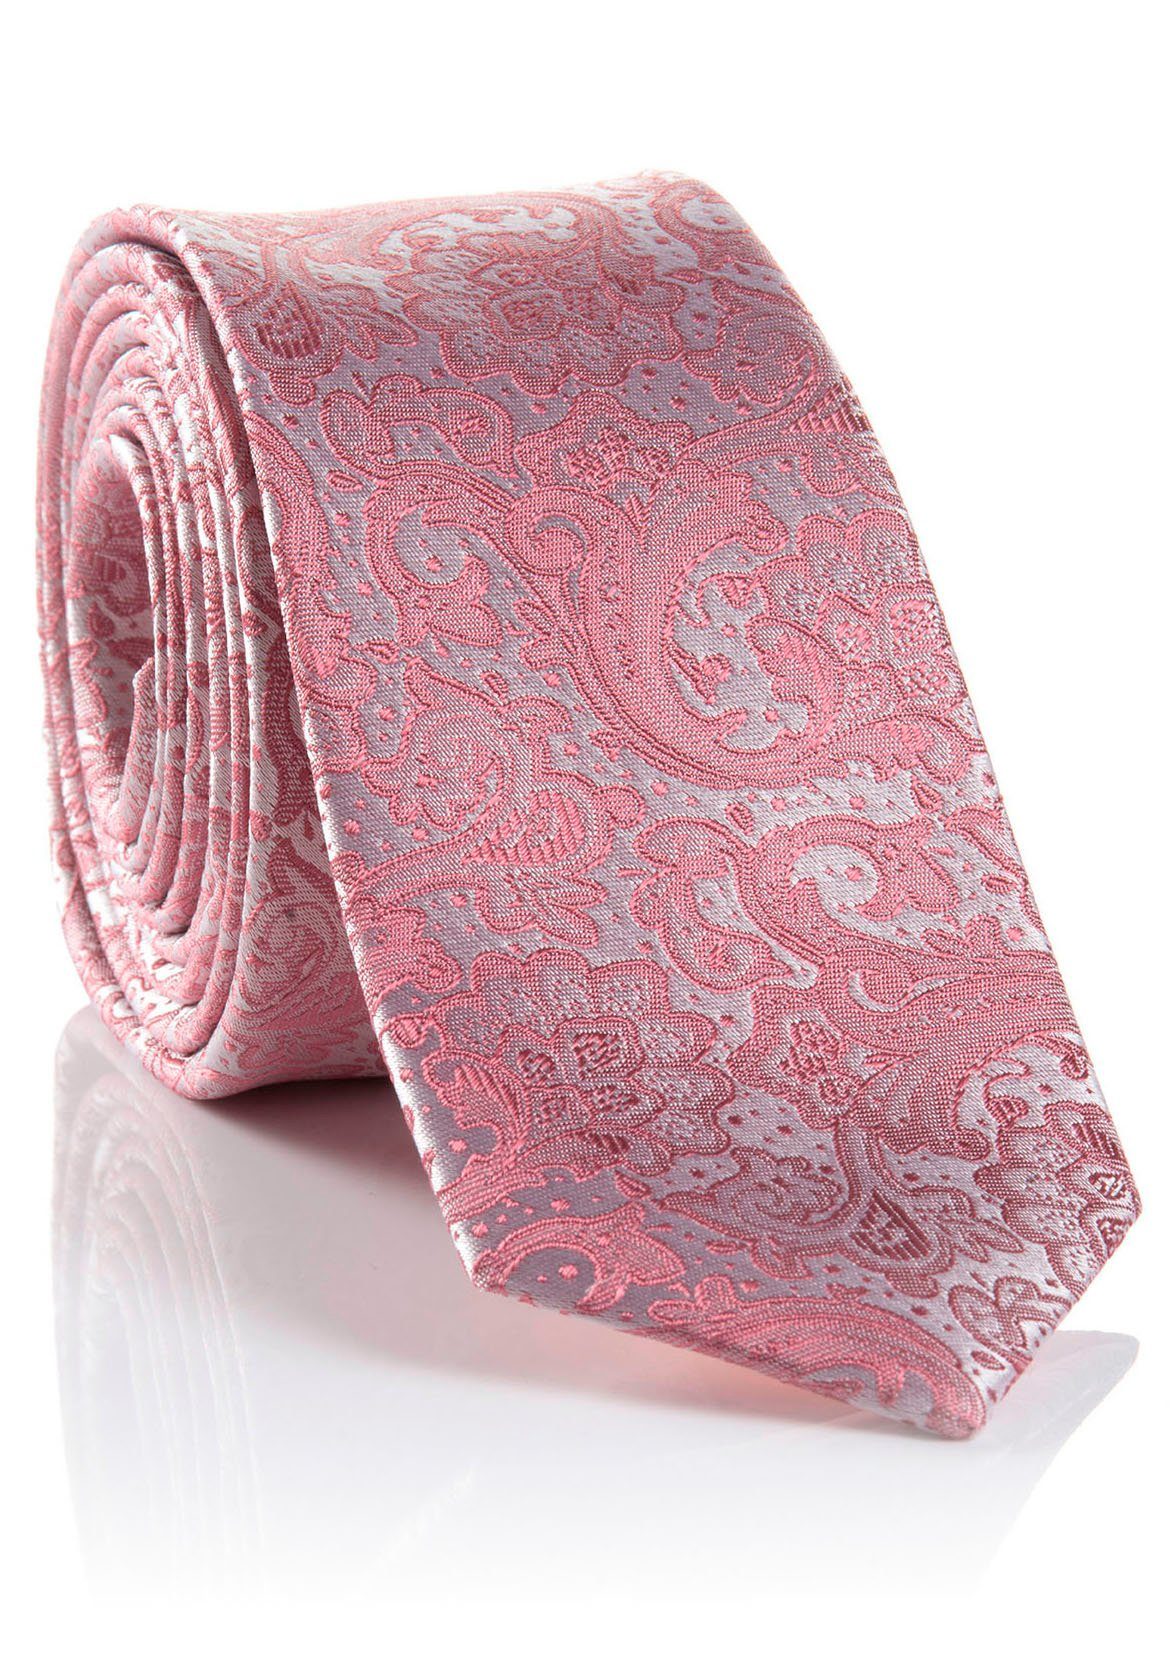 MONTI Krawatte LELIO Krawatte aus reiner Seide, Paisley-Muster bright red | Breite Krawatten